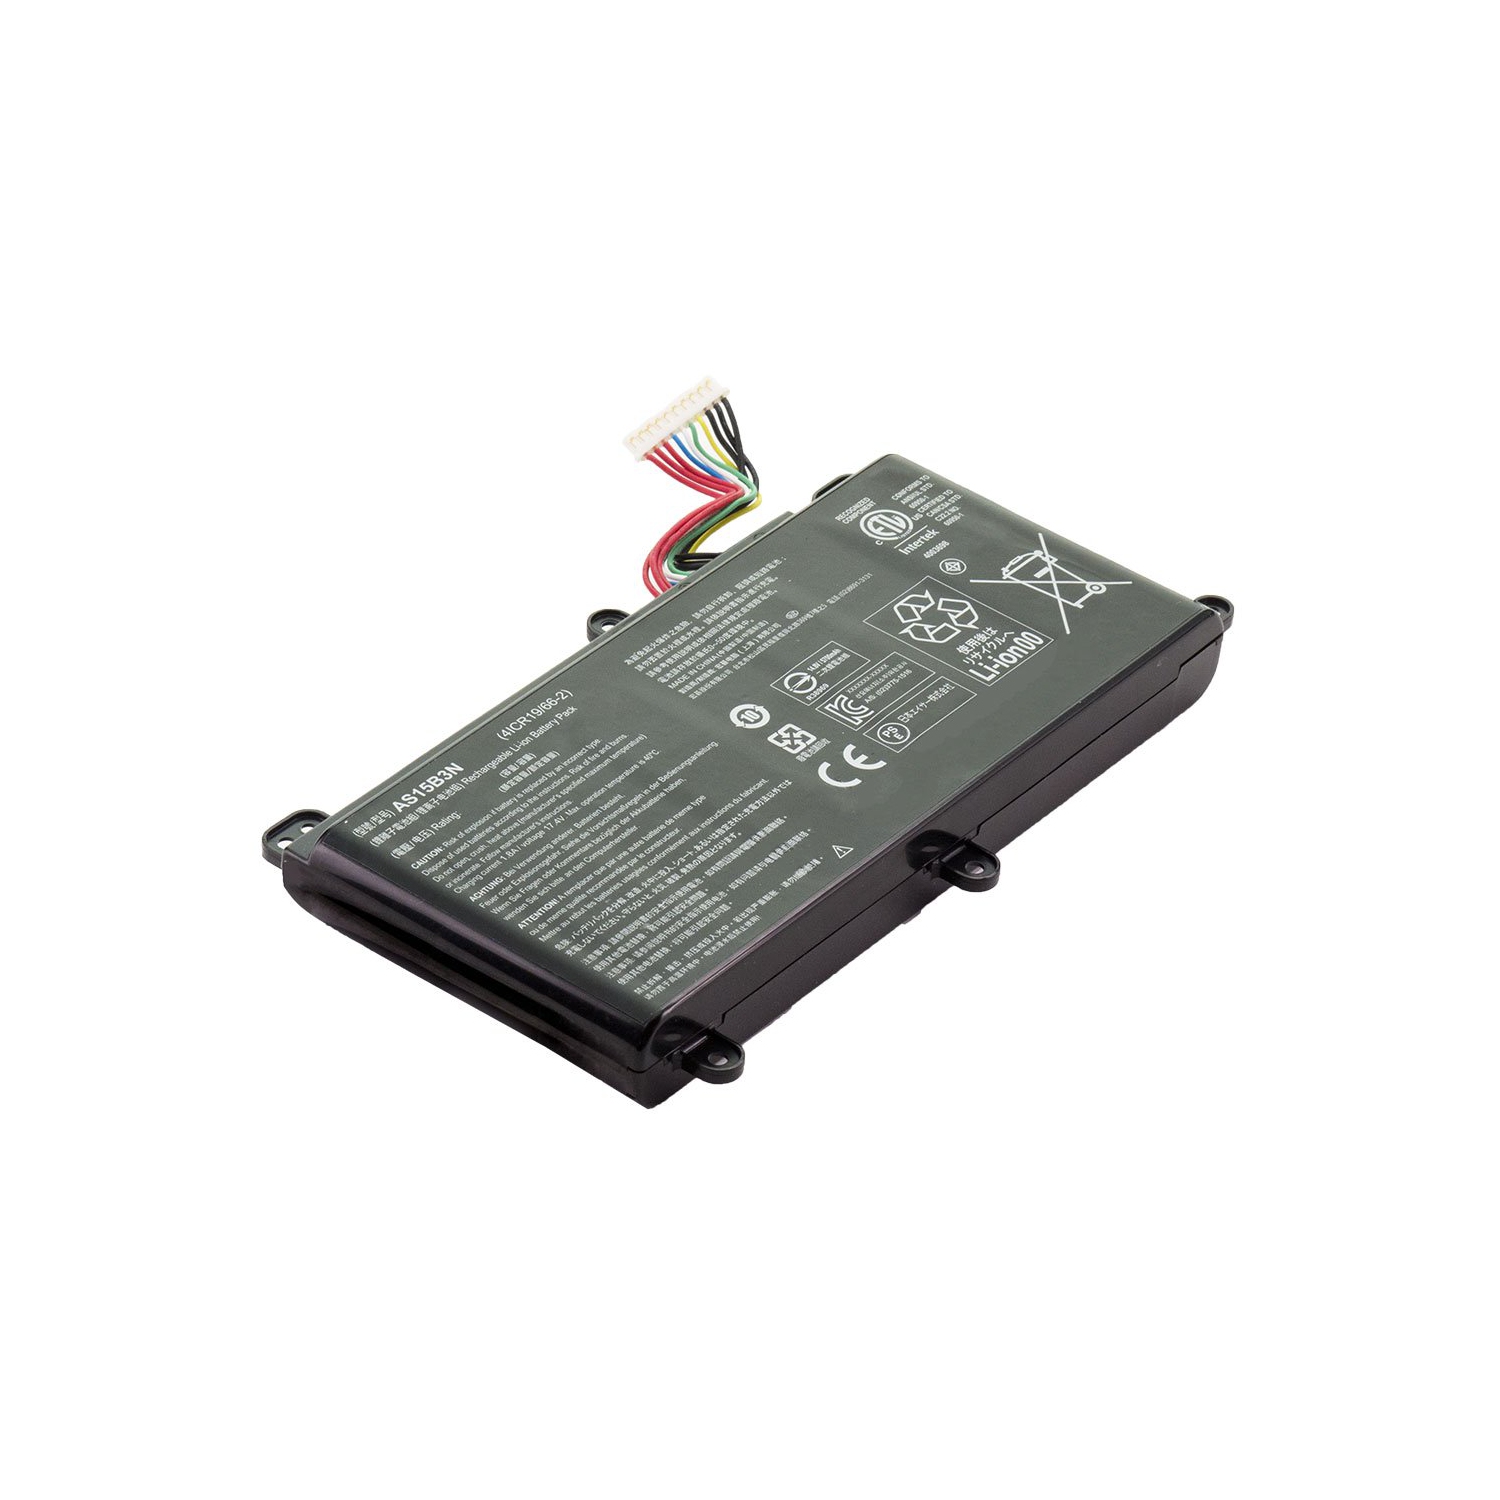 Laptop Battery Replacement for Acer Predator 15 G9-592-77ZU, AS15B3N, KT.00803.004, KT.00803.005